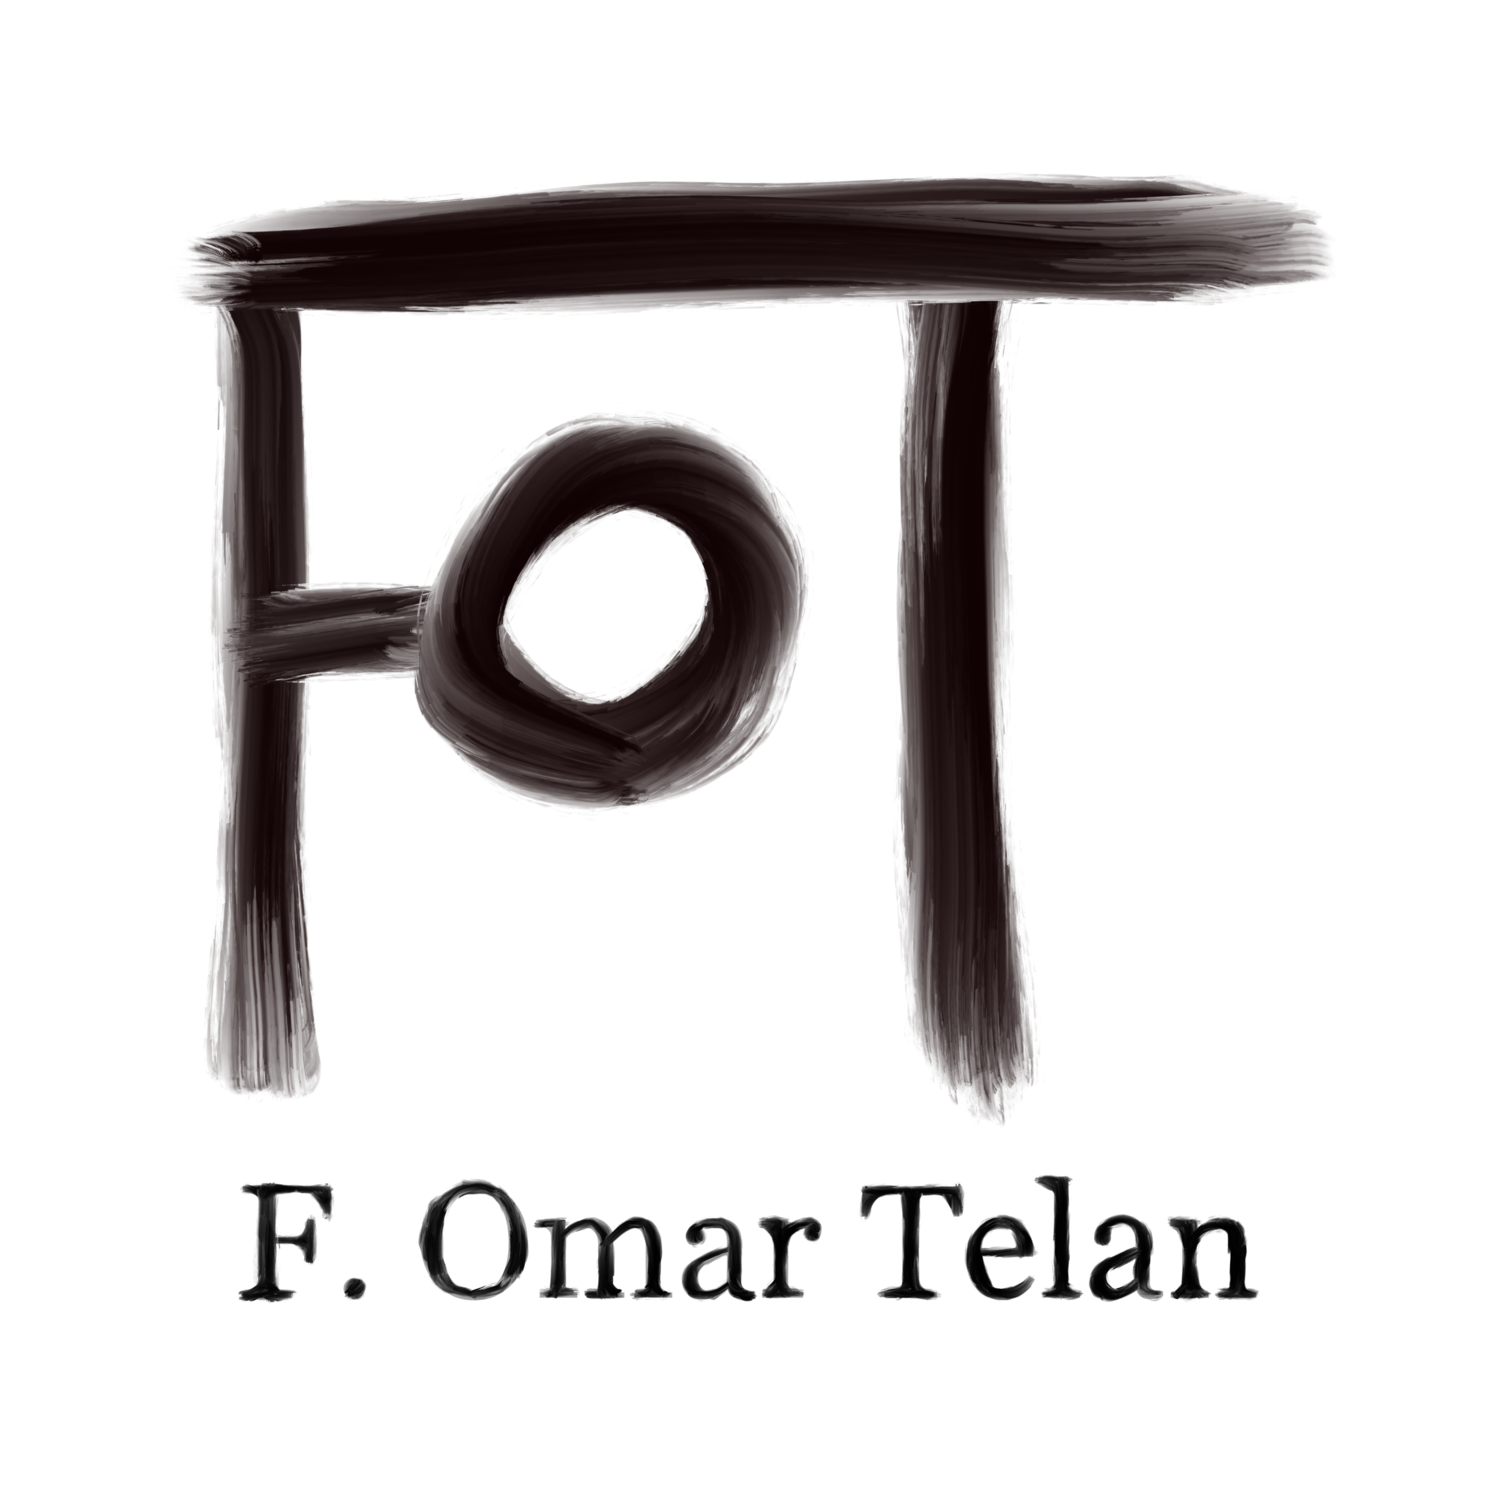 F. Omar Telan